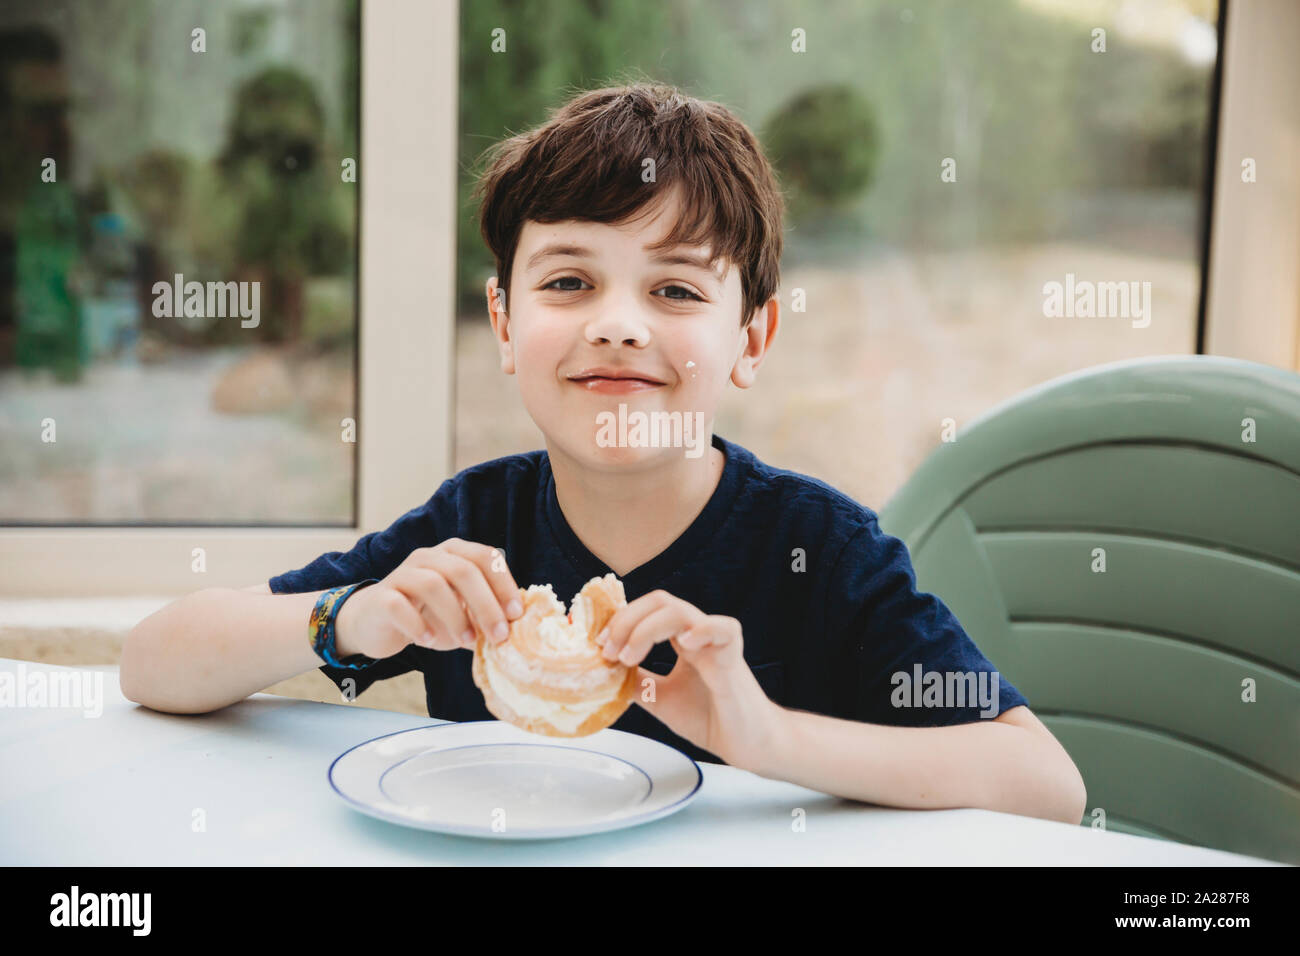 Portrait of boy enjoying cream donut with cream on his cheek Stock Photo